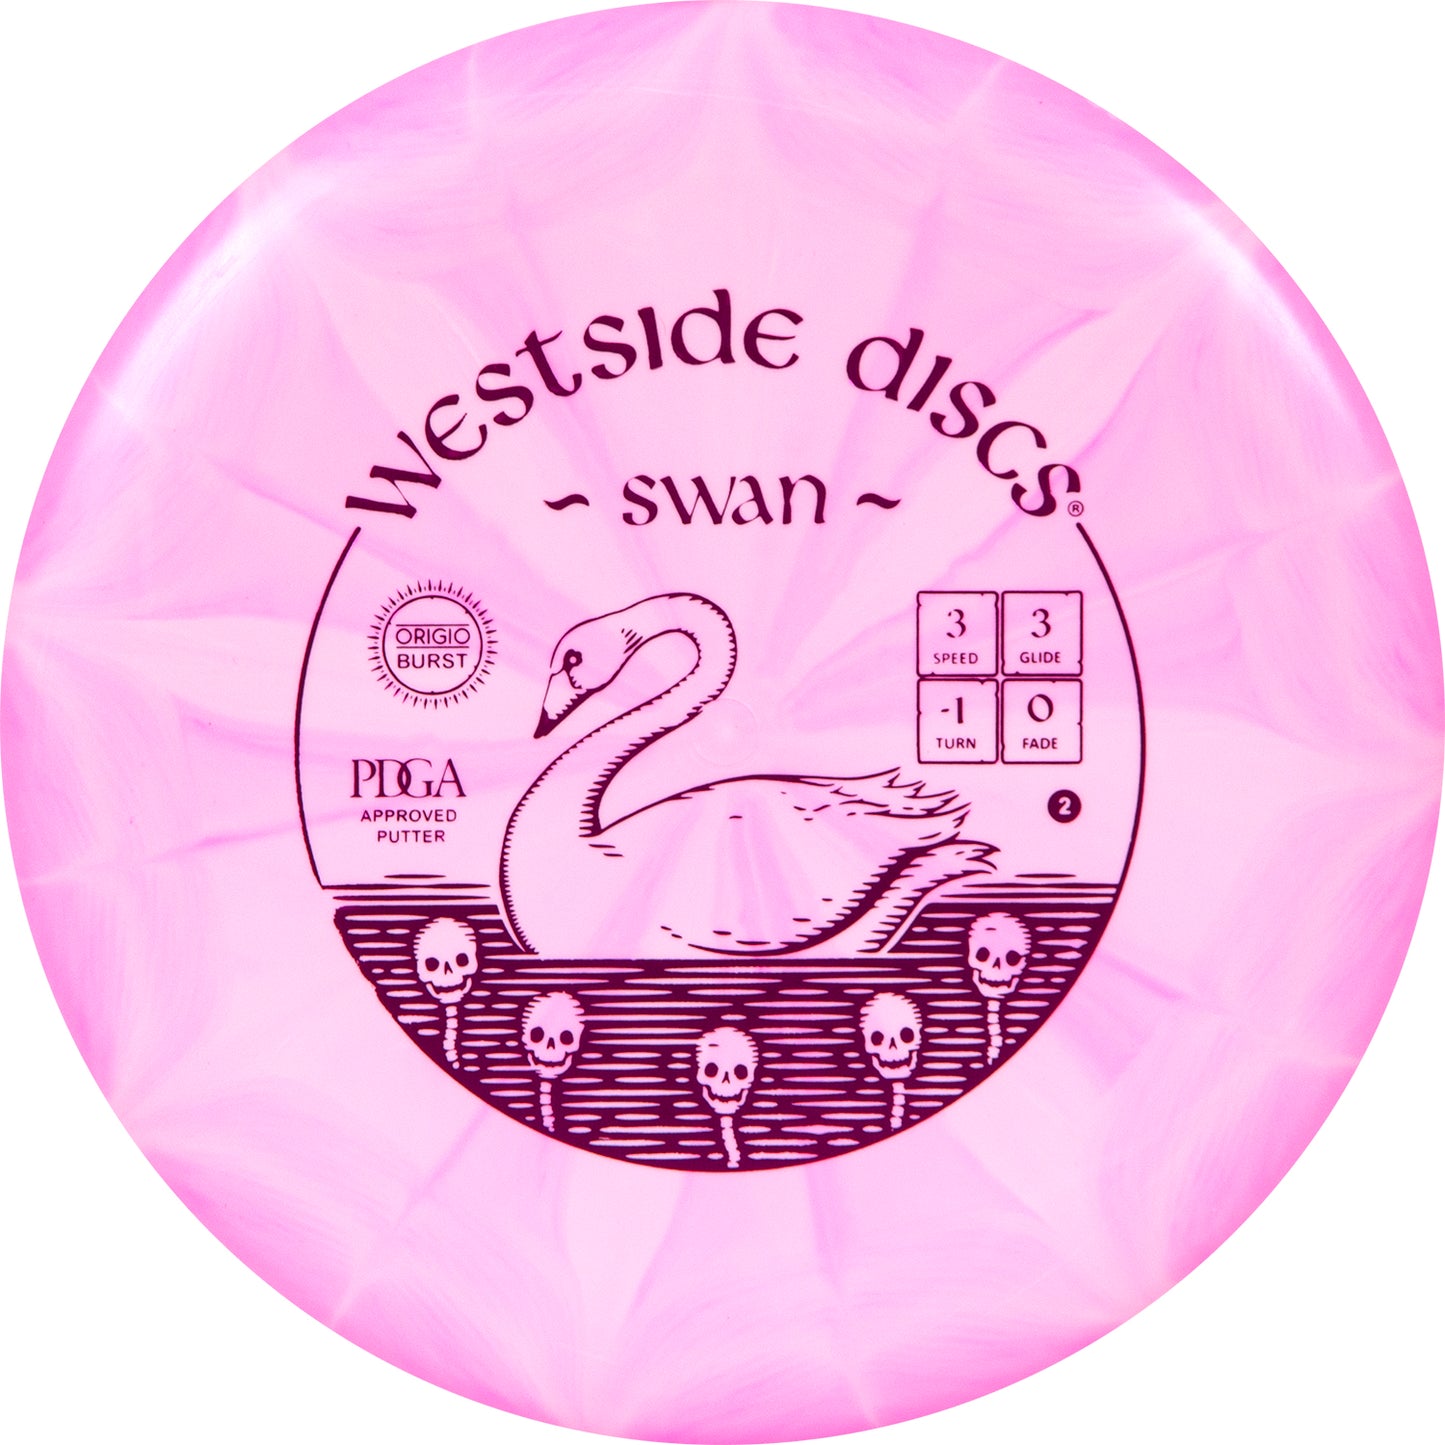 Westside Discs Origio Burst Swan 2